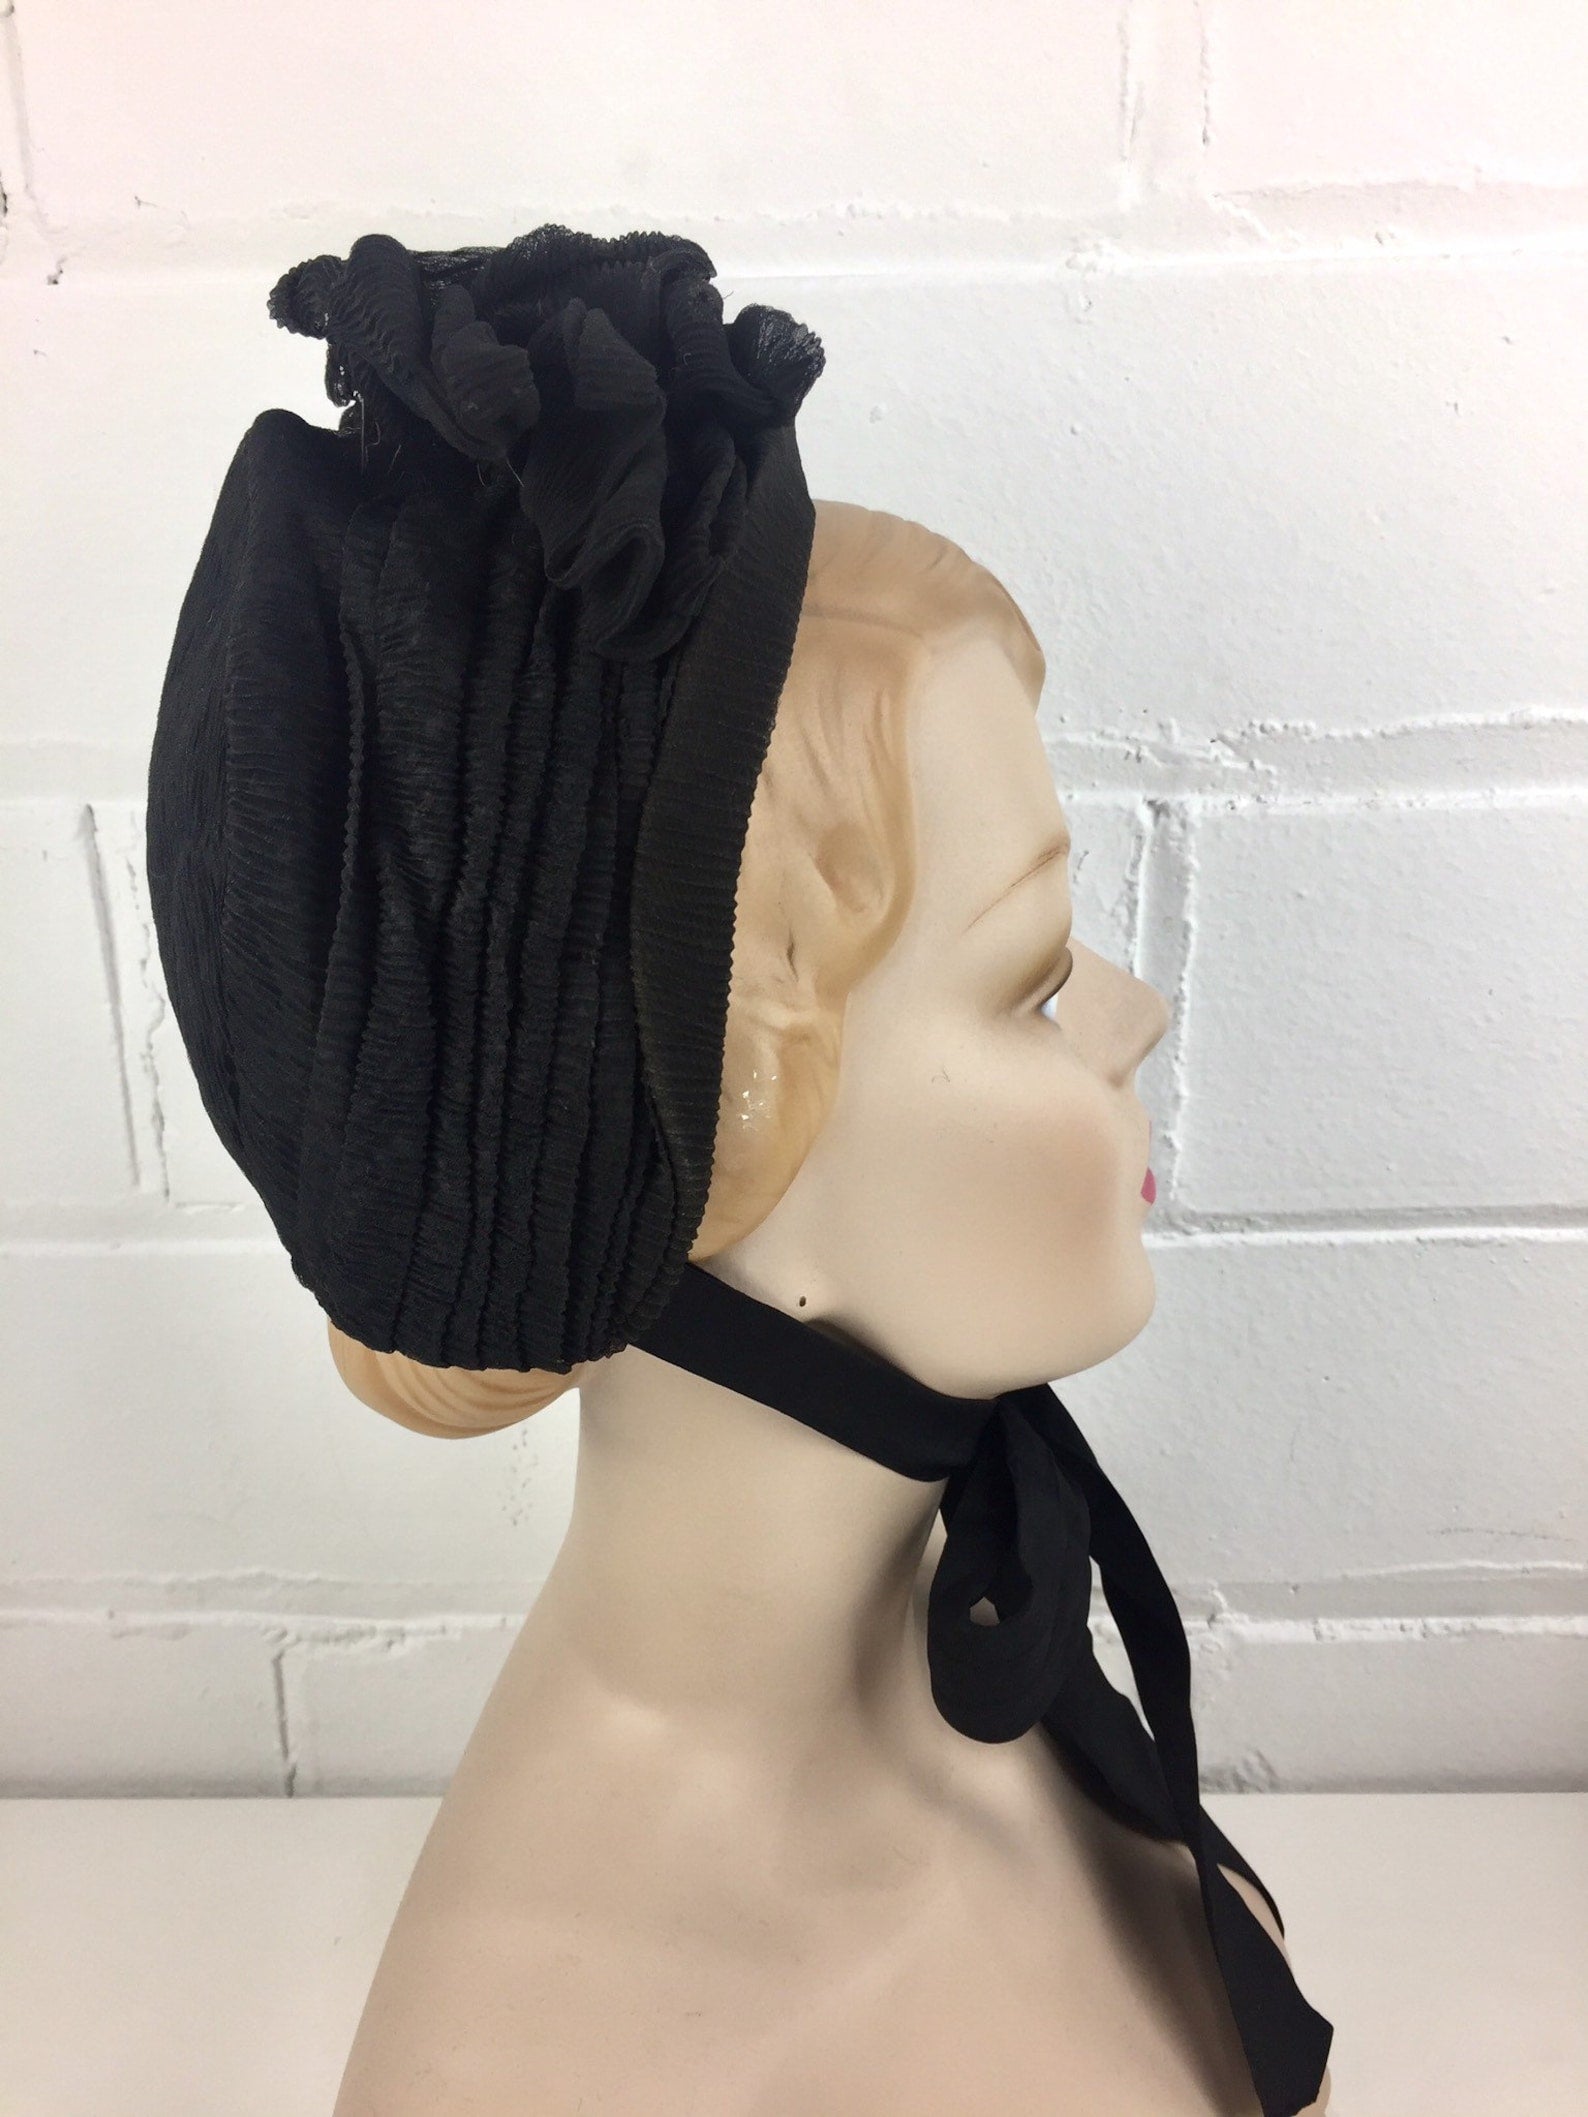 Antique Victorian Black Bonnet Cap With Bow & Ribbon Ties, Black Crepe, Net Veil Lining, Victorian Mourning, Civil War Clothing